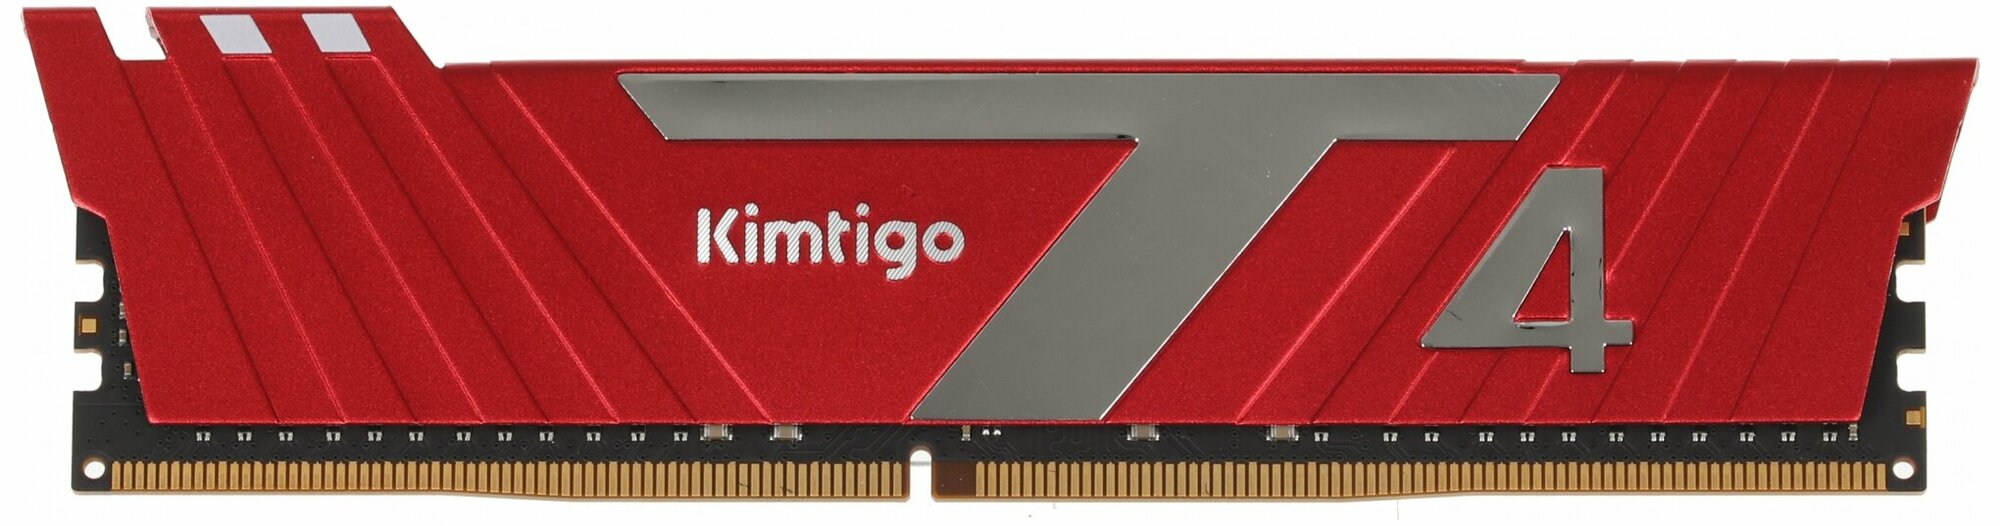 Оперативная память Kimtigo DDR4 3600 МГц DIMM CL19